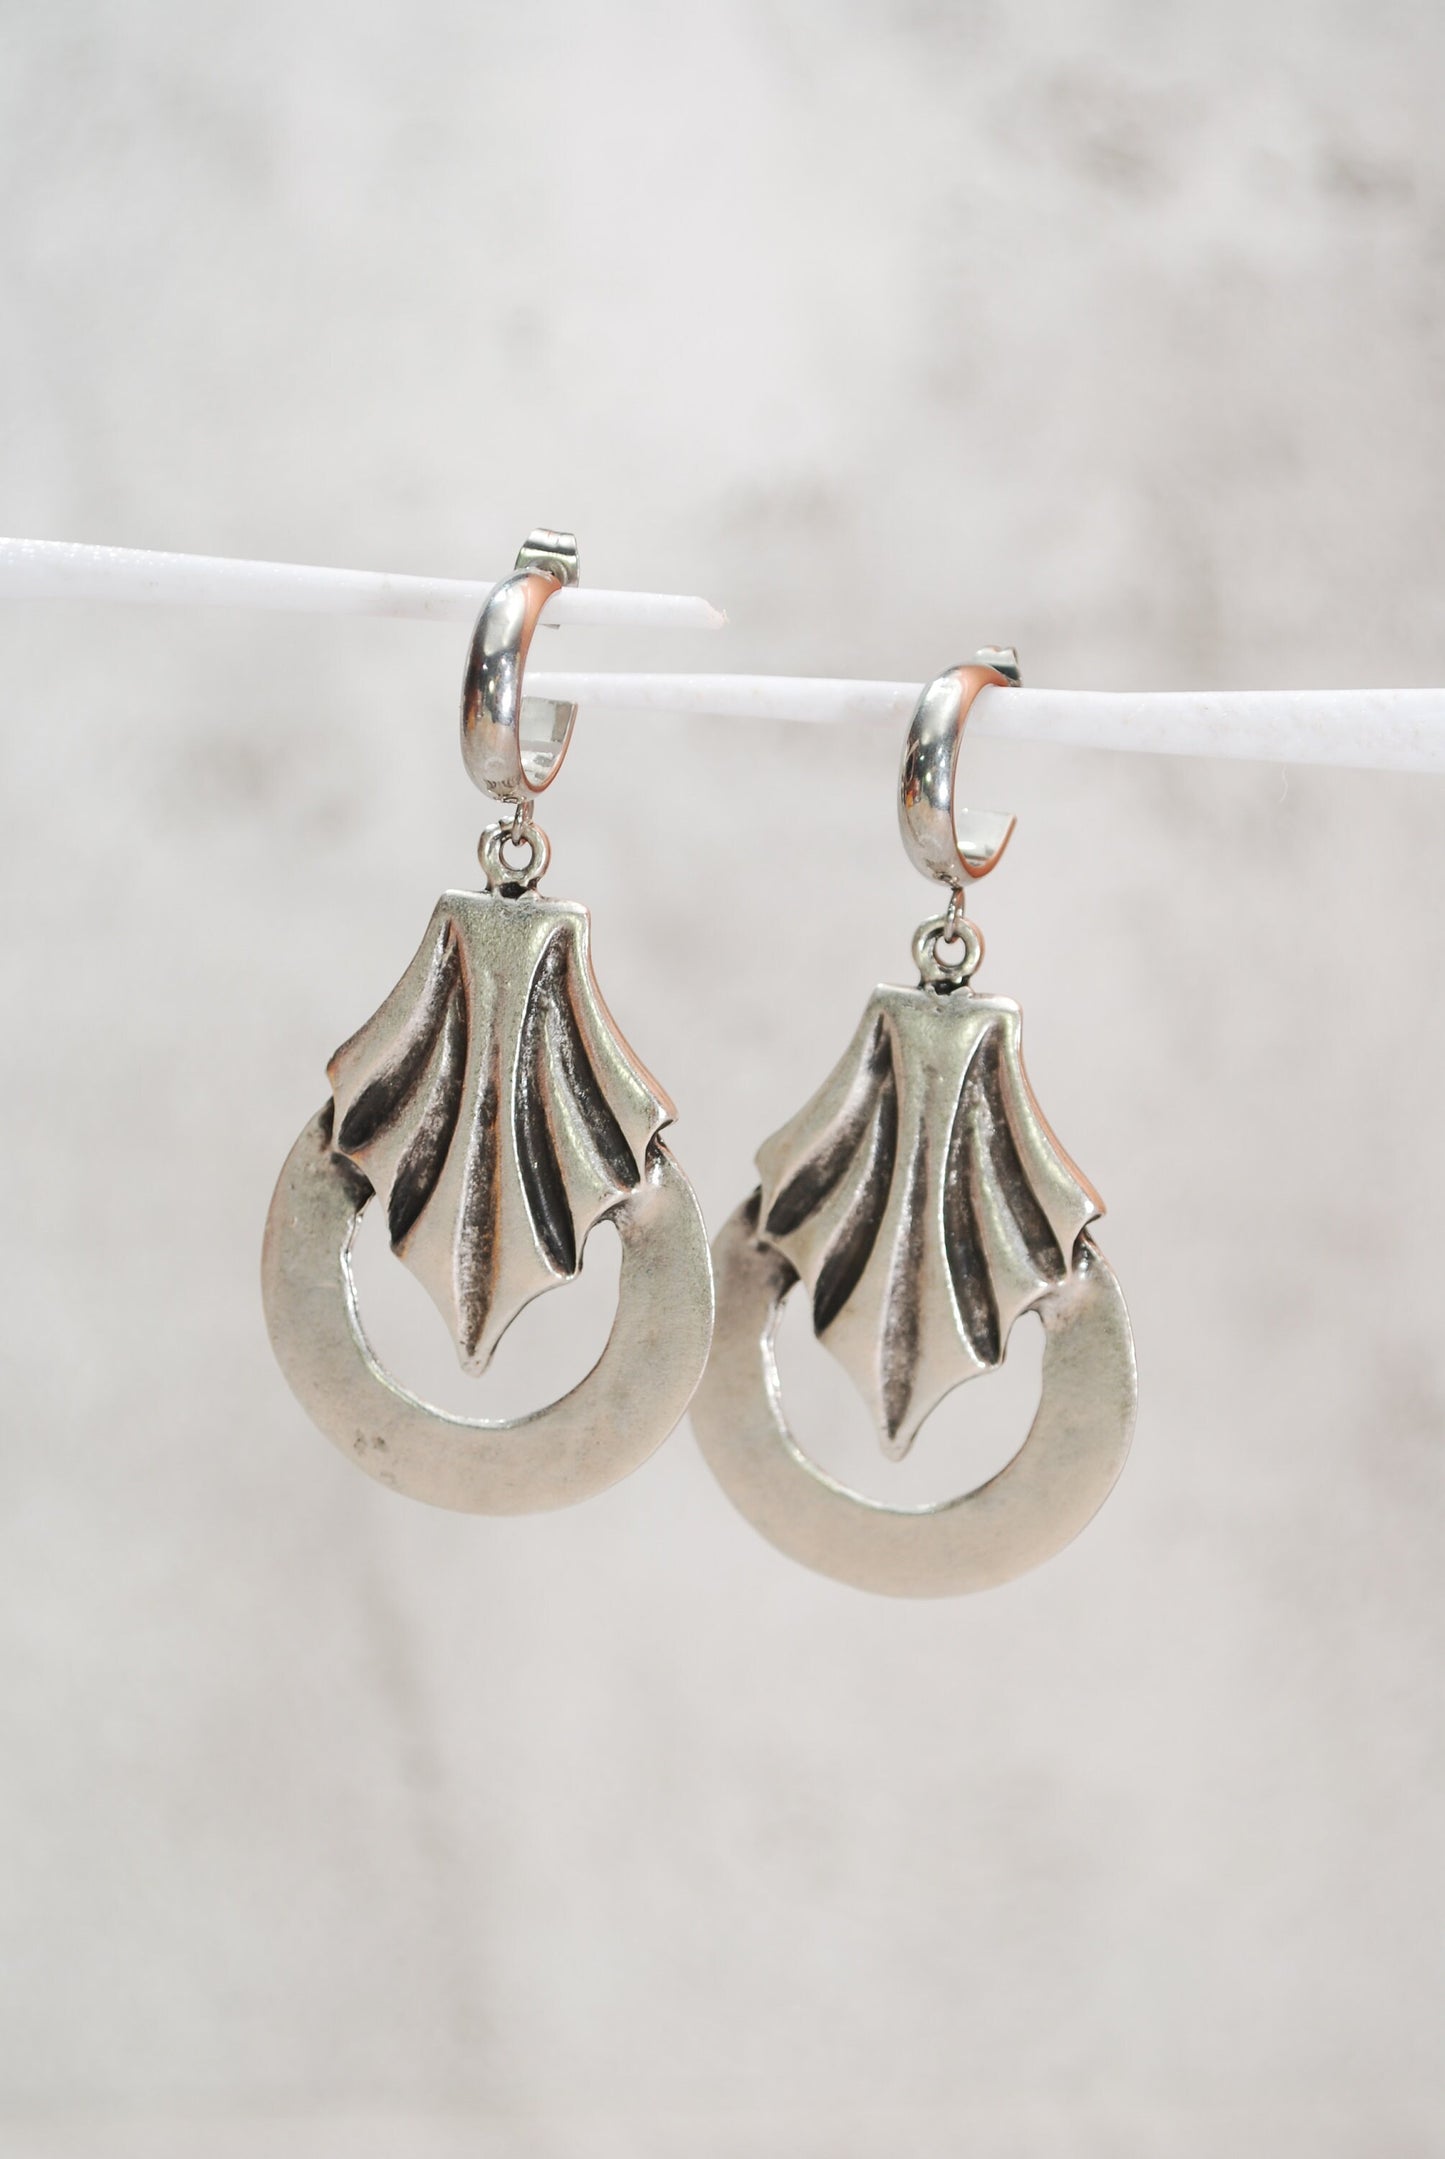 Abstract shape silver earrings, tribal earrings, boho earrings, free style, uniqe design 6,5cm - 2 1/2"